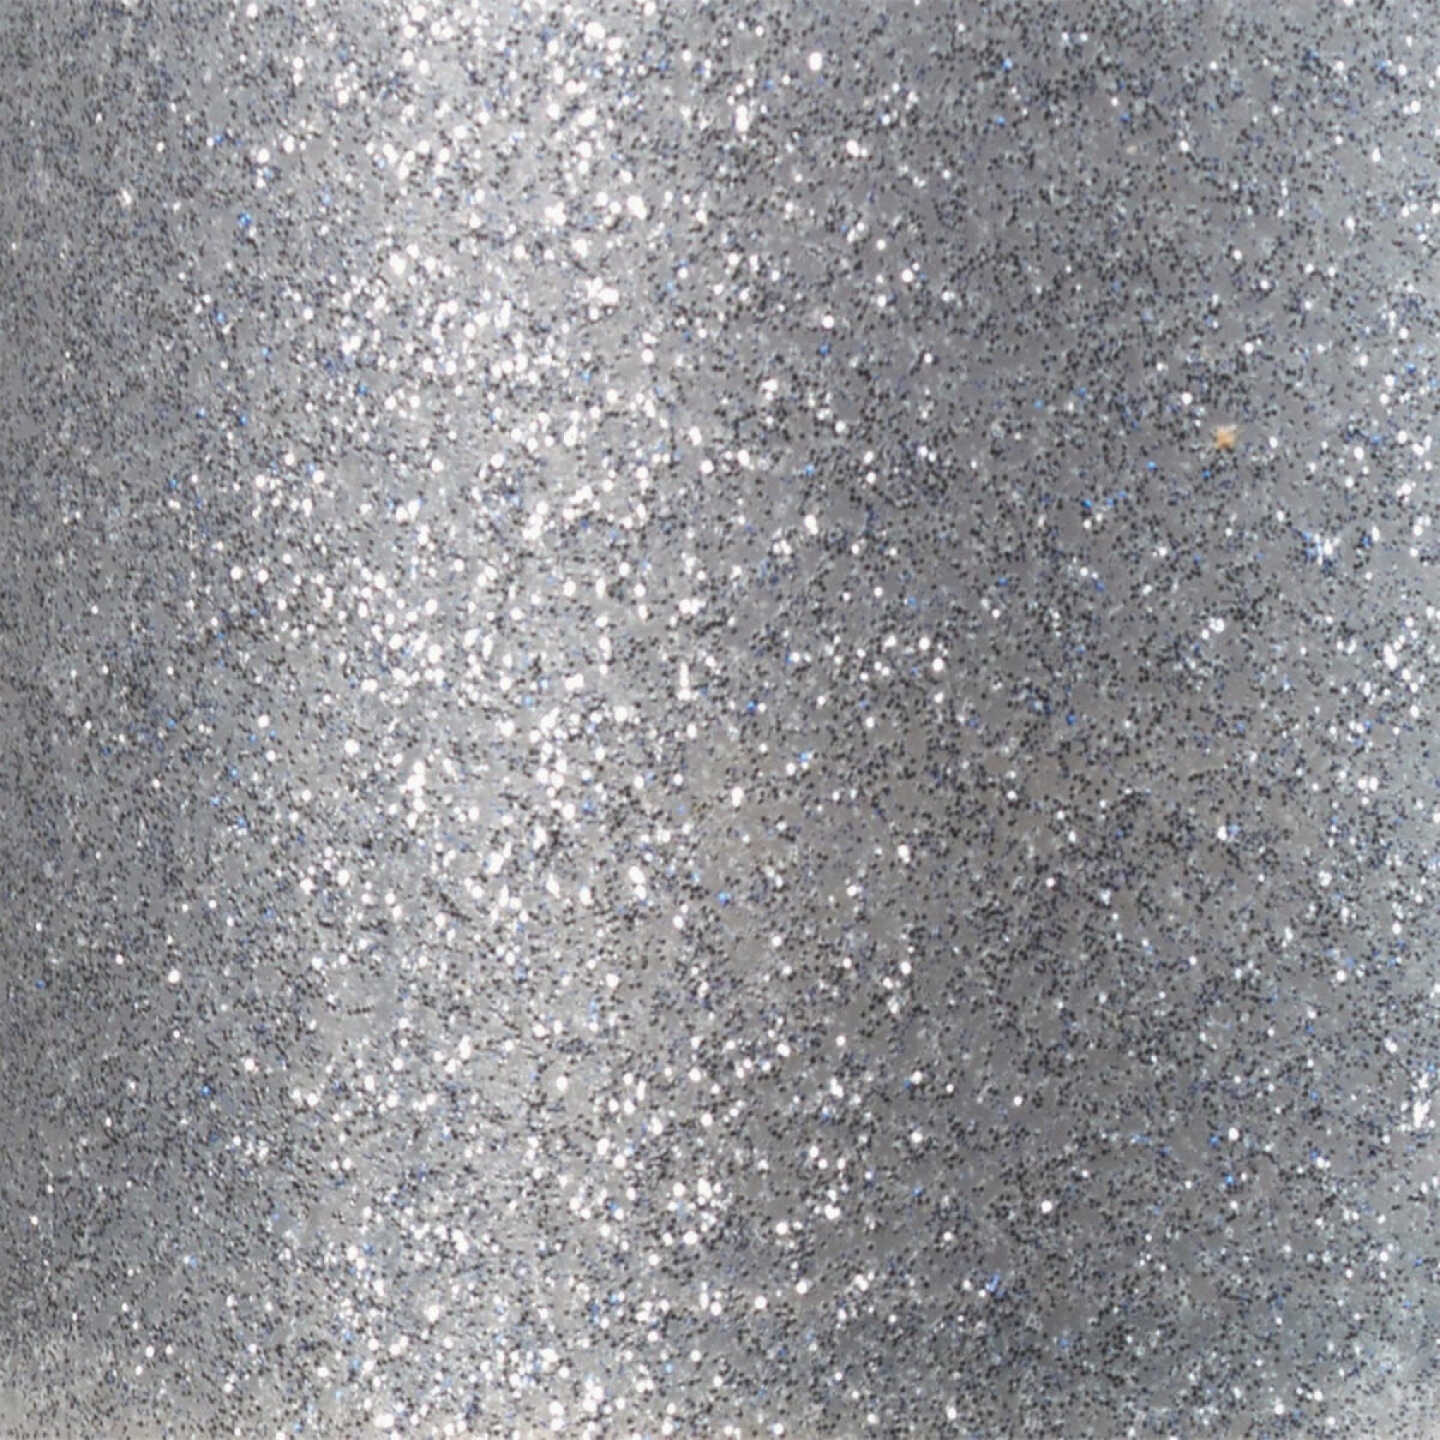 Rust-Oleum Imagine Craft & Hobby 10.25 Oz. Intense Silver Glitter